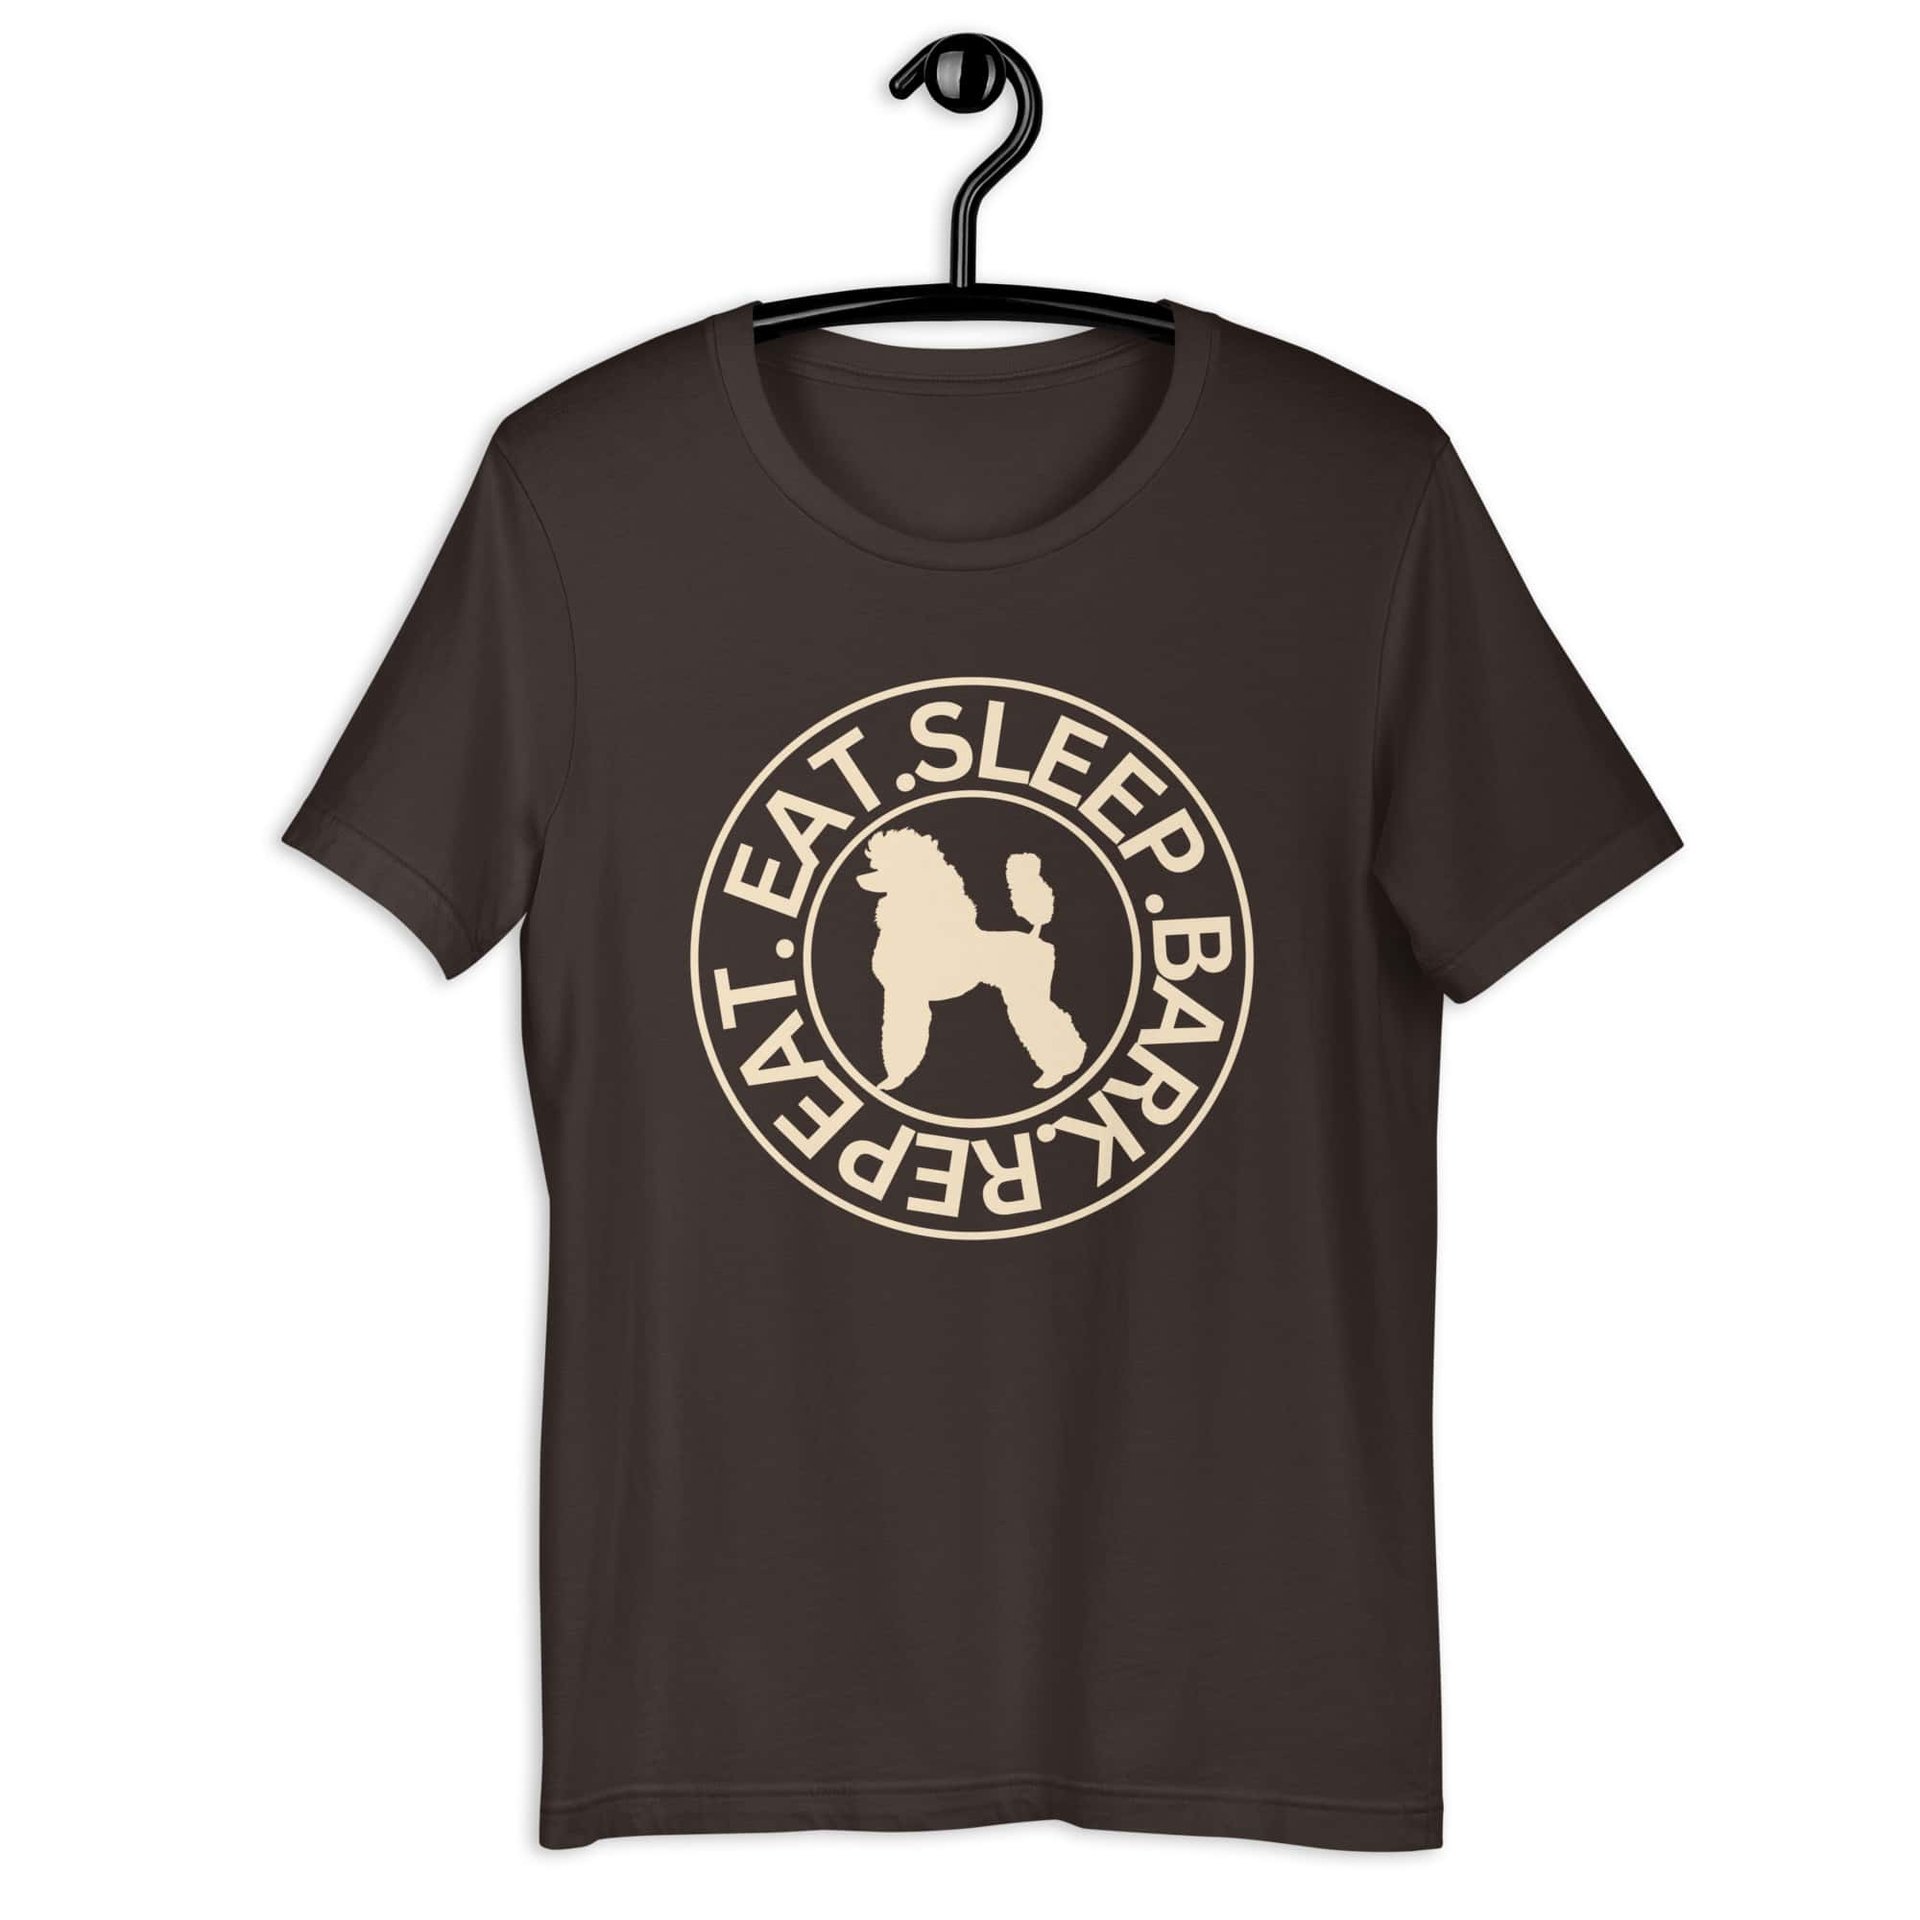 Eat Sleep Repeat Bark Miniature Poodle Unisex T-Shirt. Brown